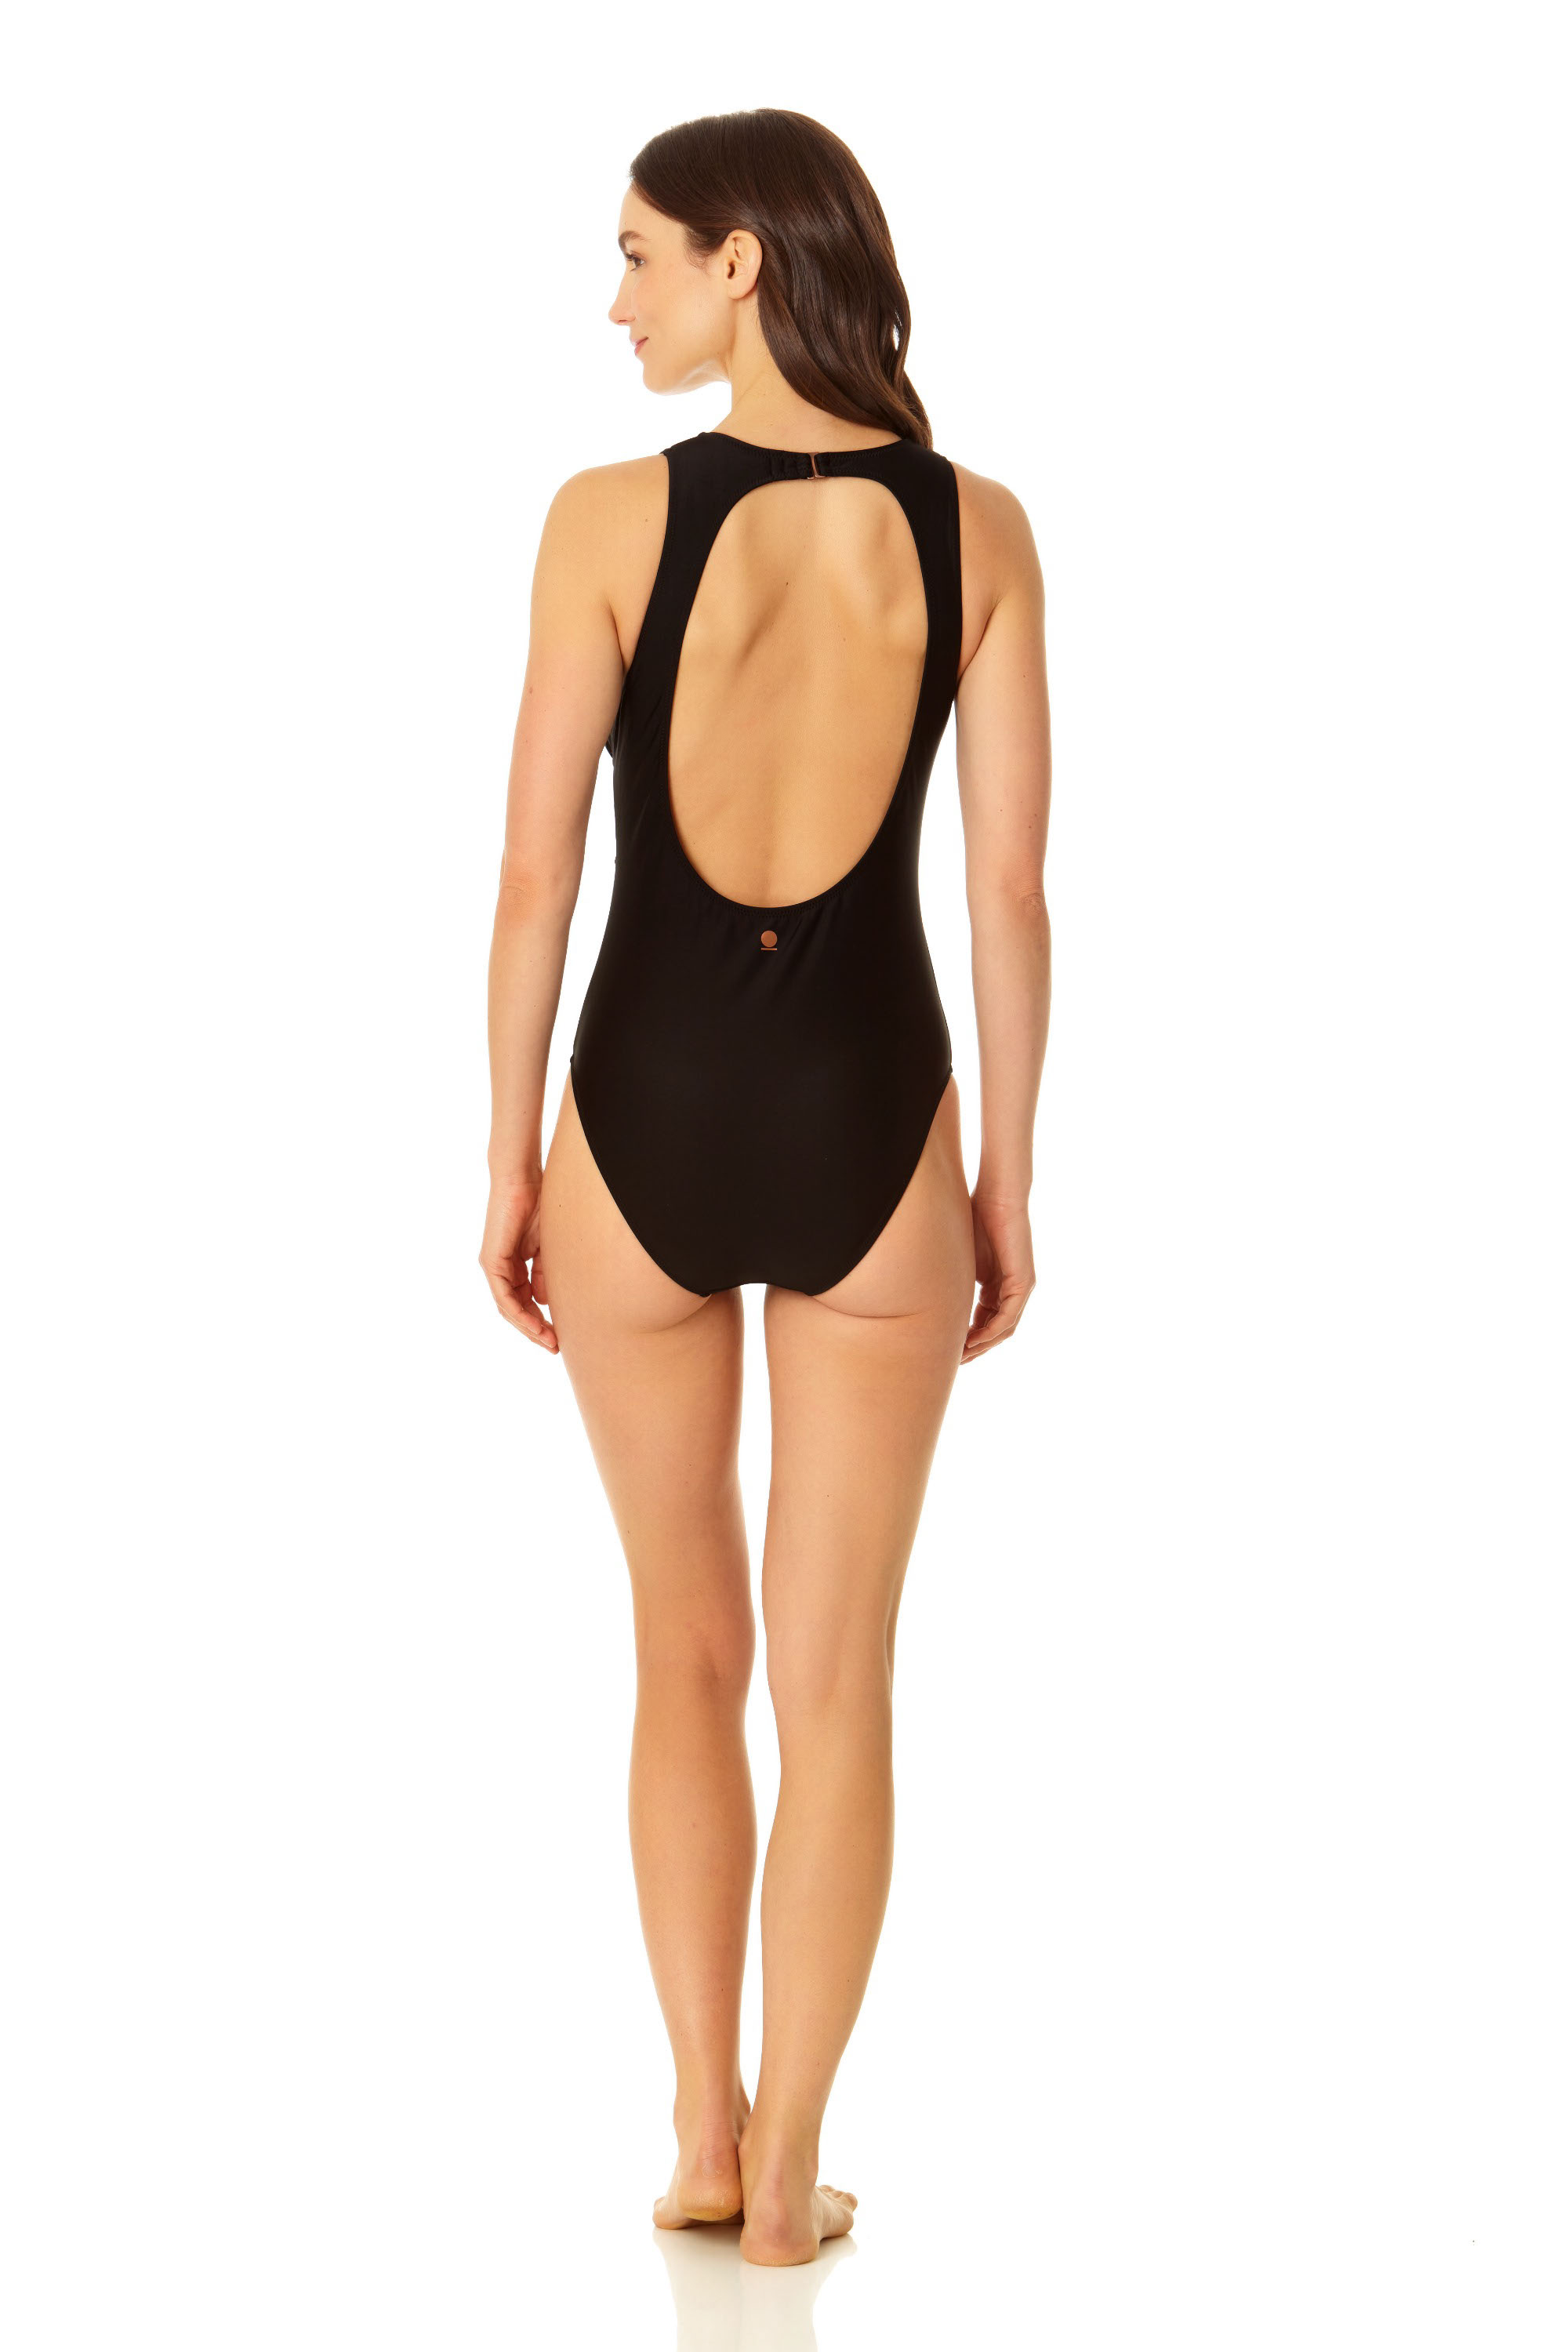 Women's Sporty One Piece Swimsuit in Black - Coppersuit